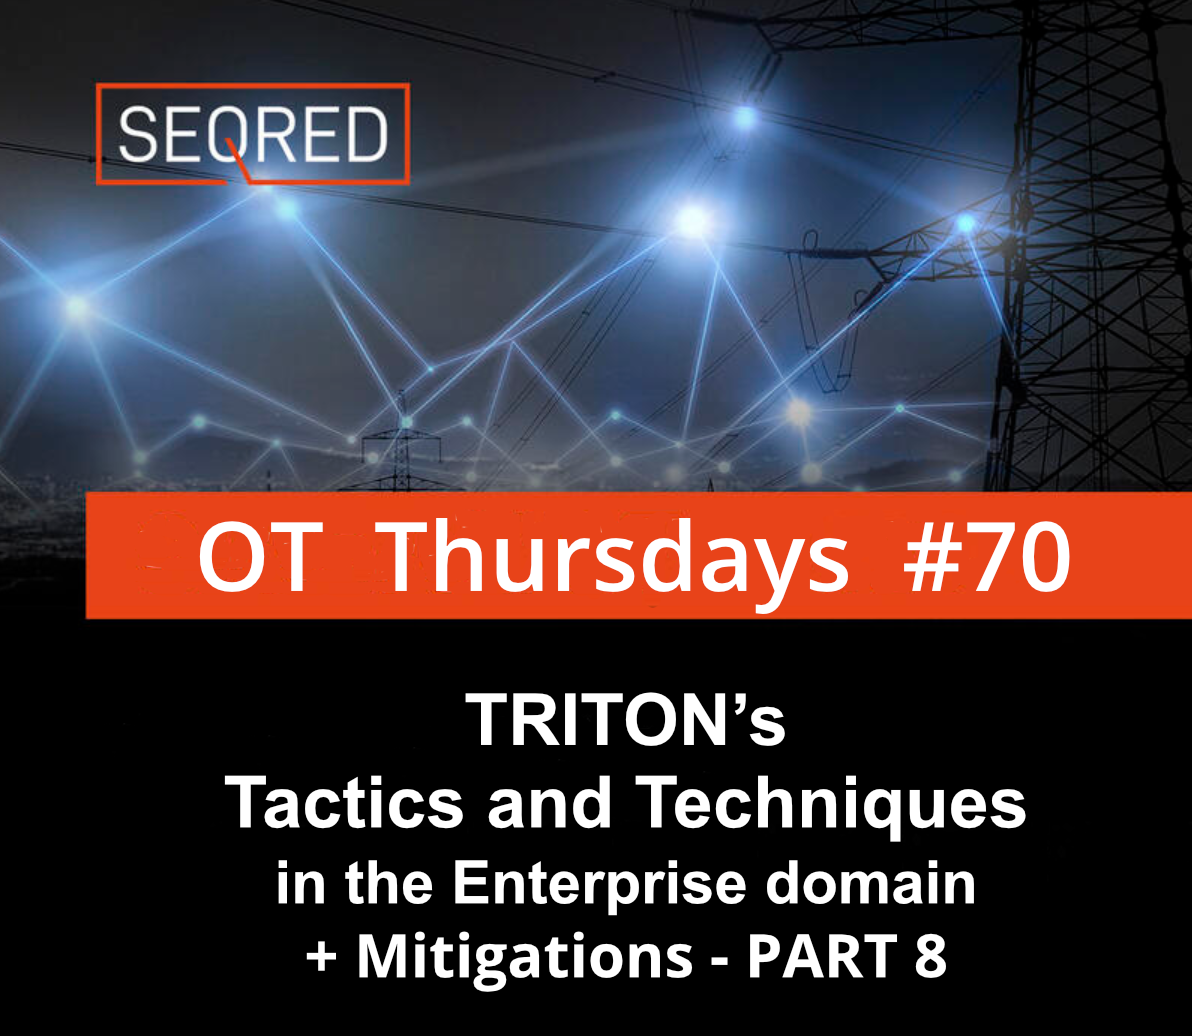 TRITON’s Tactics and Techniques in the Enterprise domain + mitigations